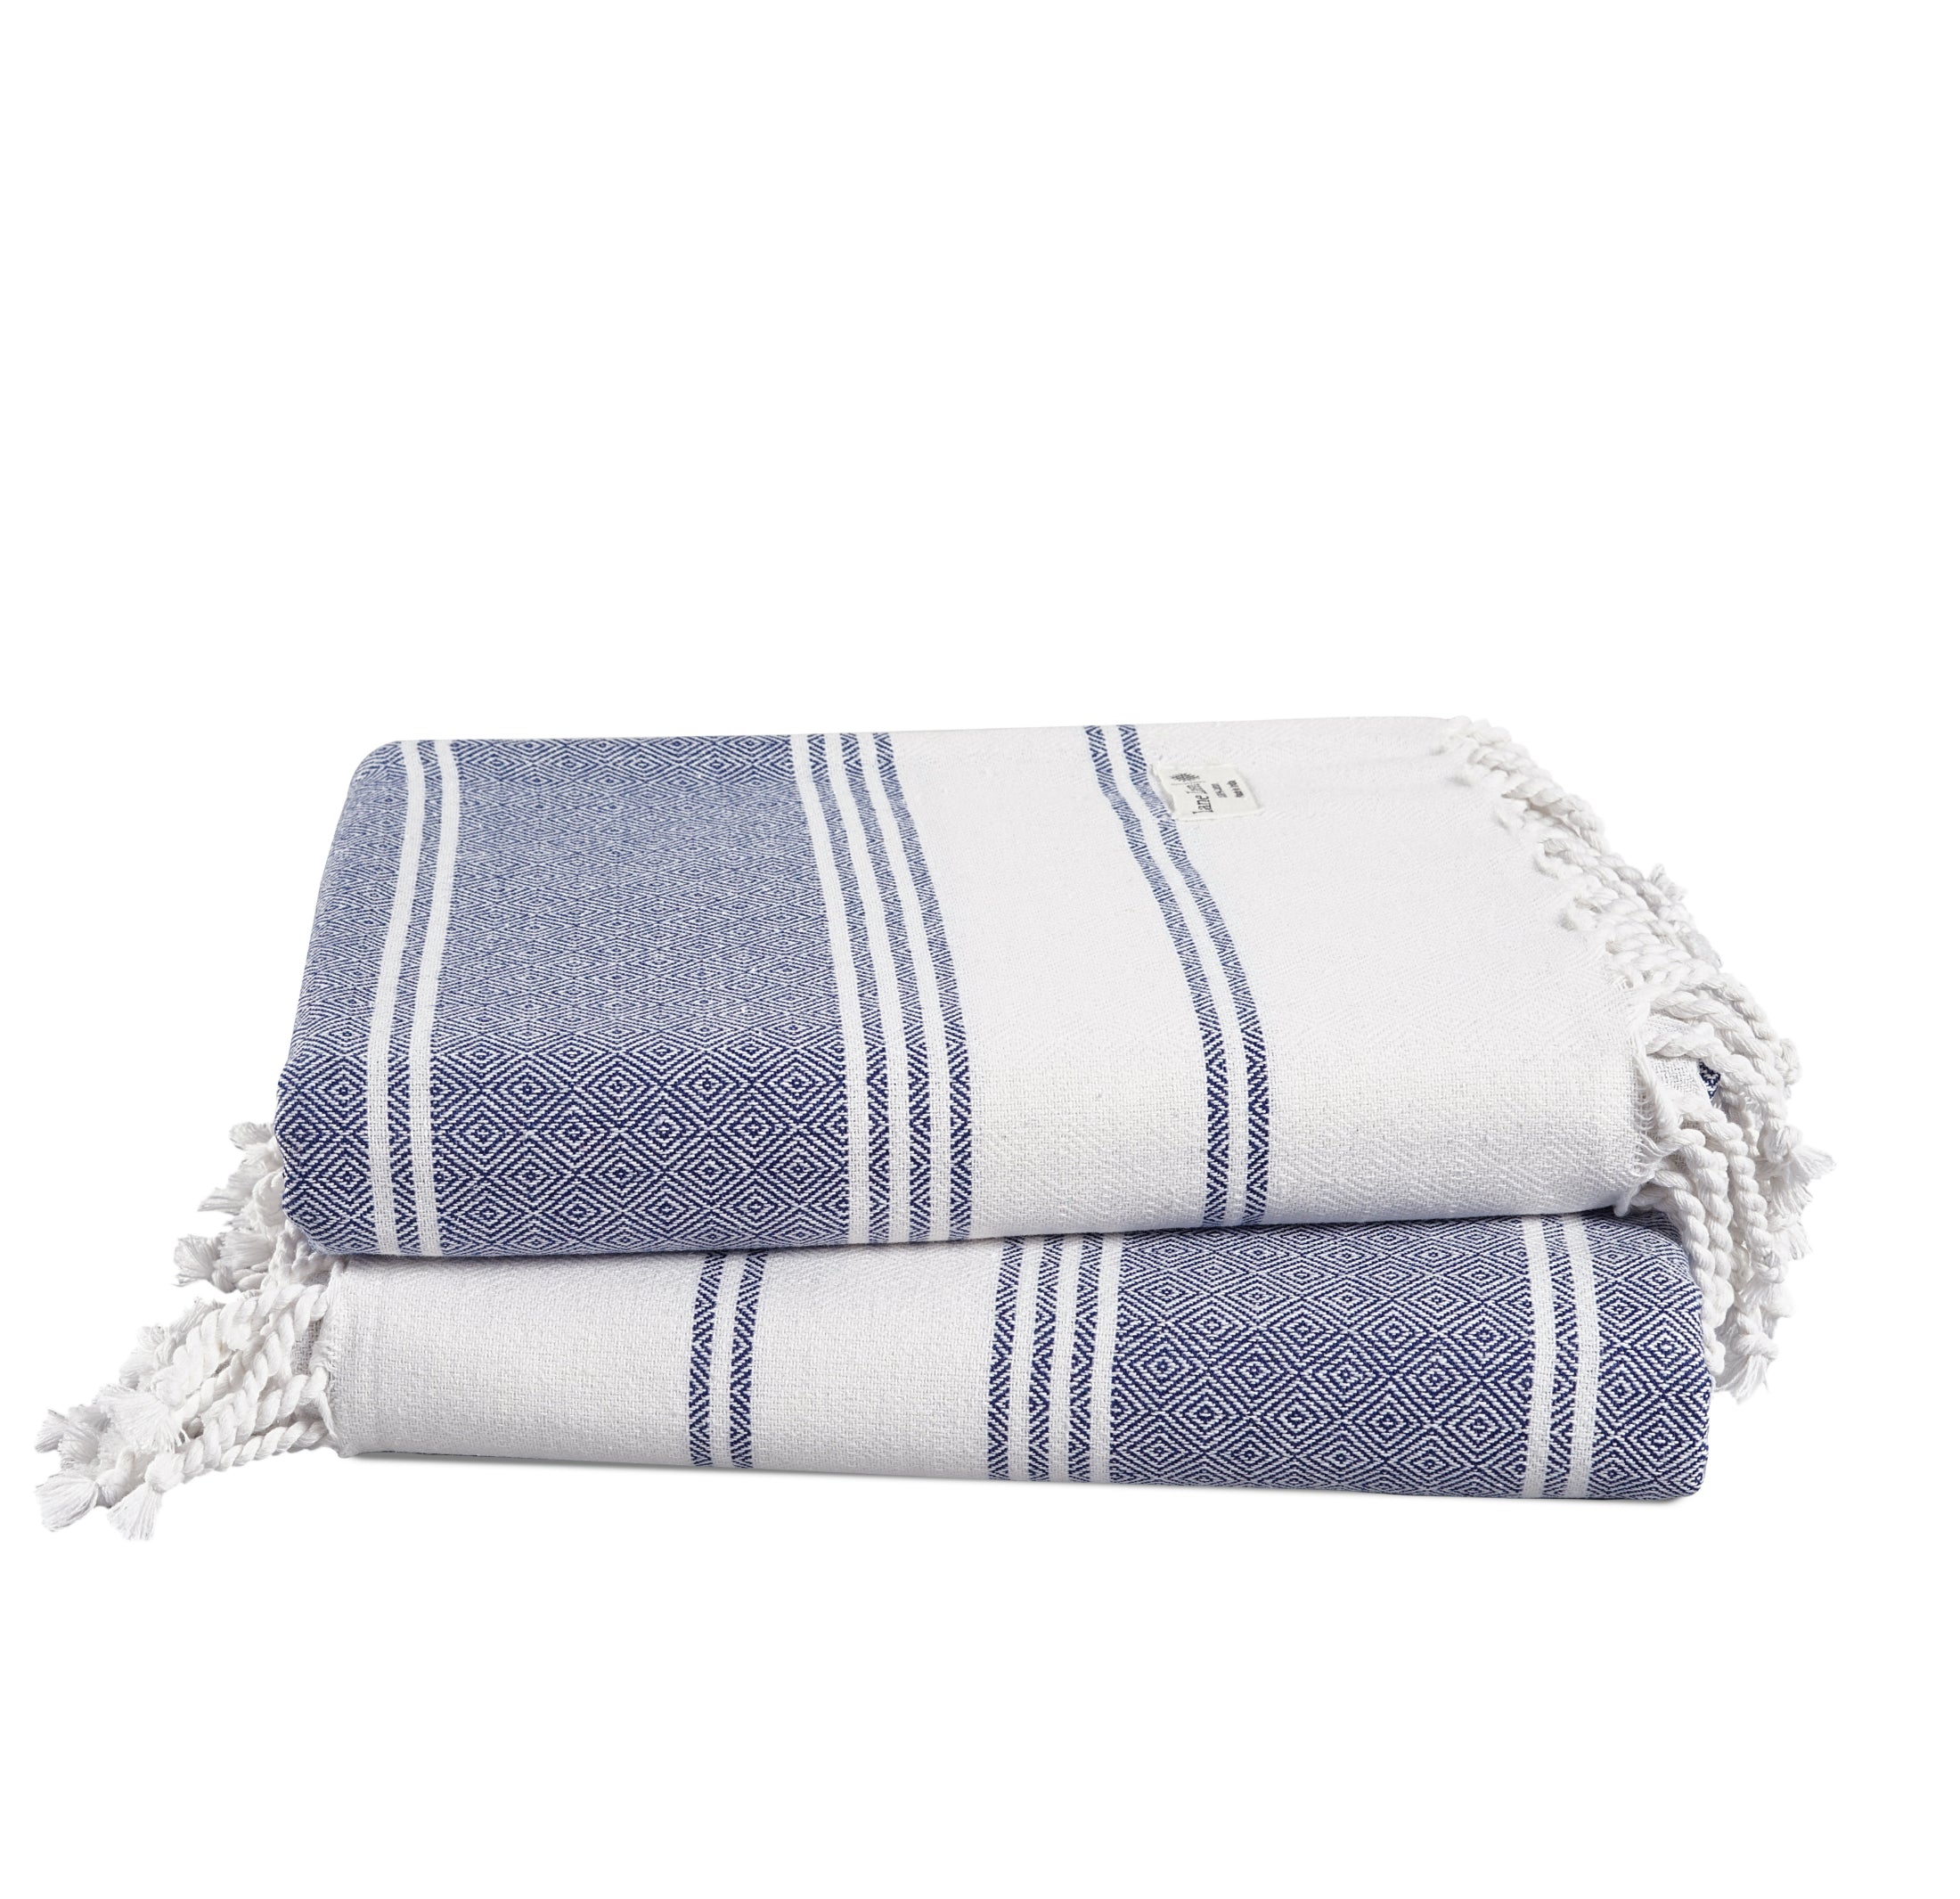 Set of 2 100% Cotton Diamond Turkish Beach Towels - Navy Blazer